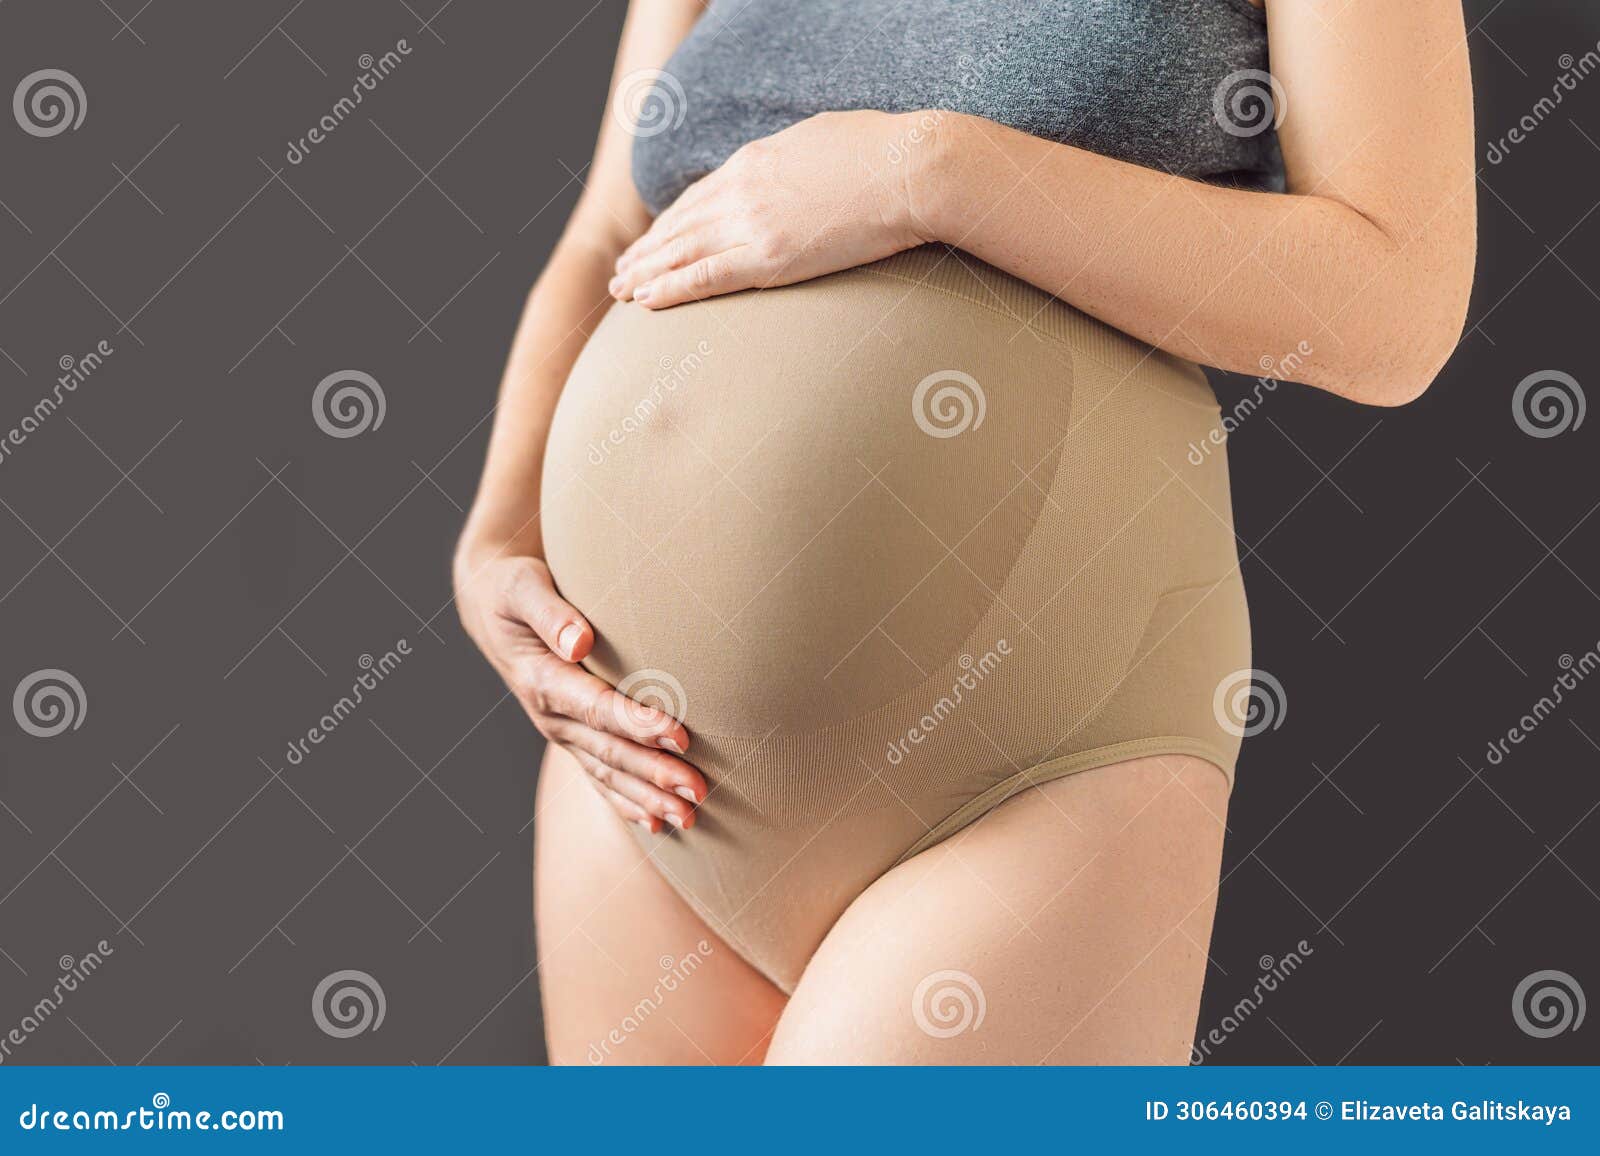 576 Maternity Corset Stock Photos - Free & Royalty-Free Stock